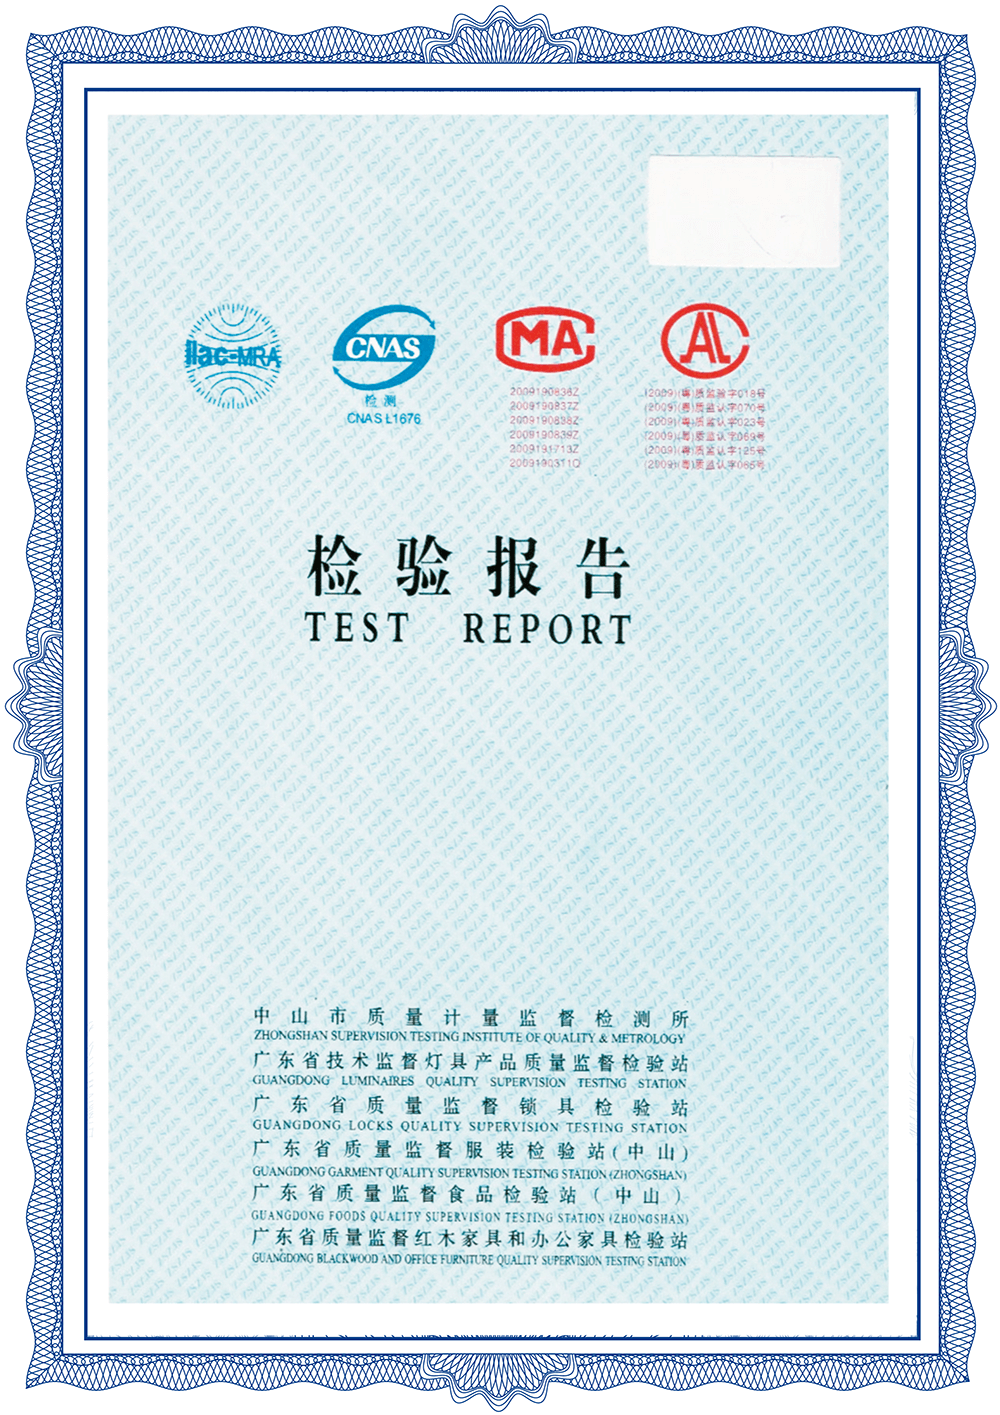 сертификат 13